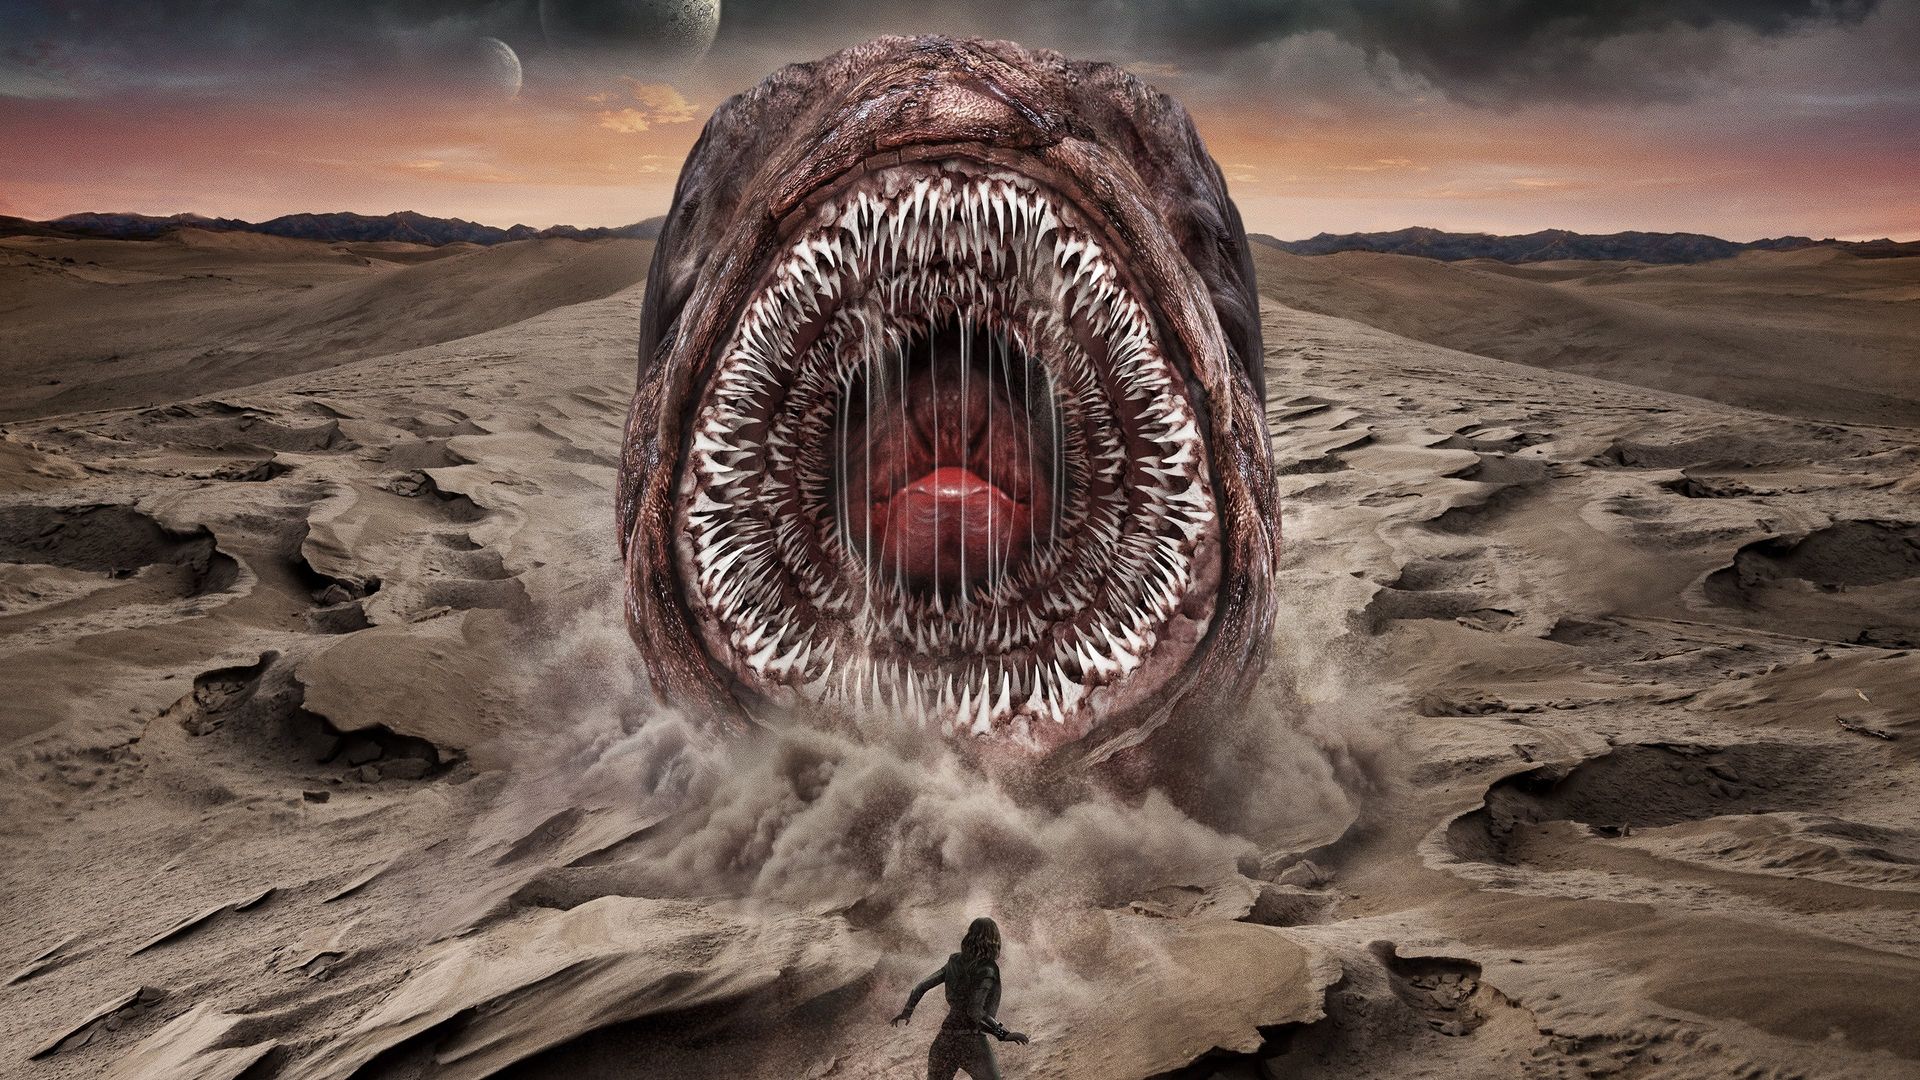 Planet Dune background